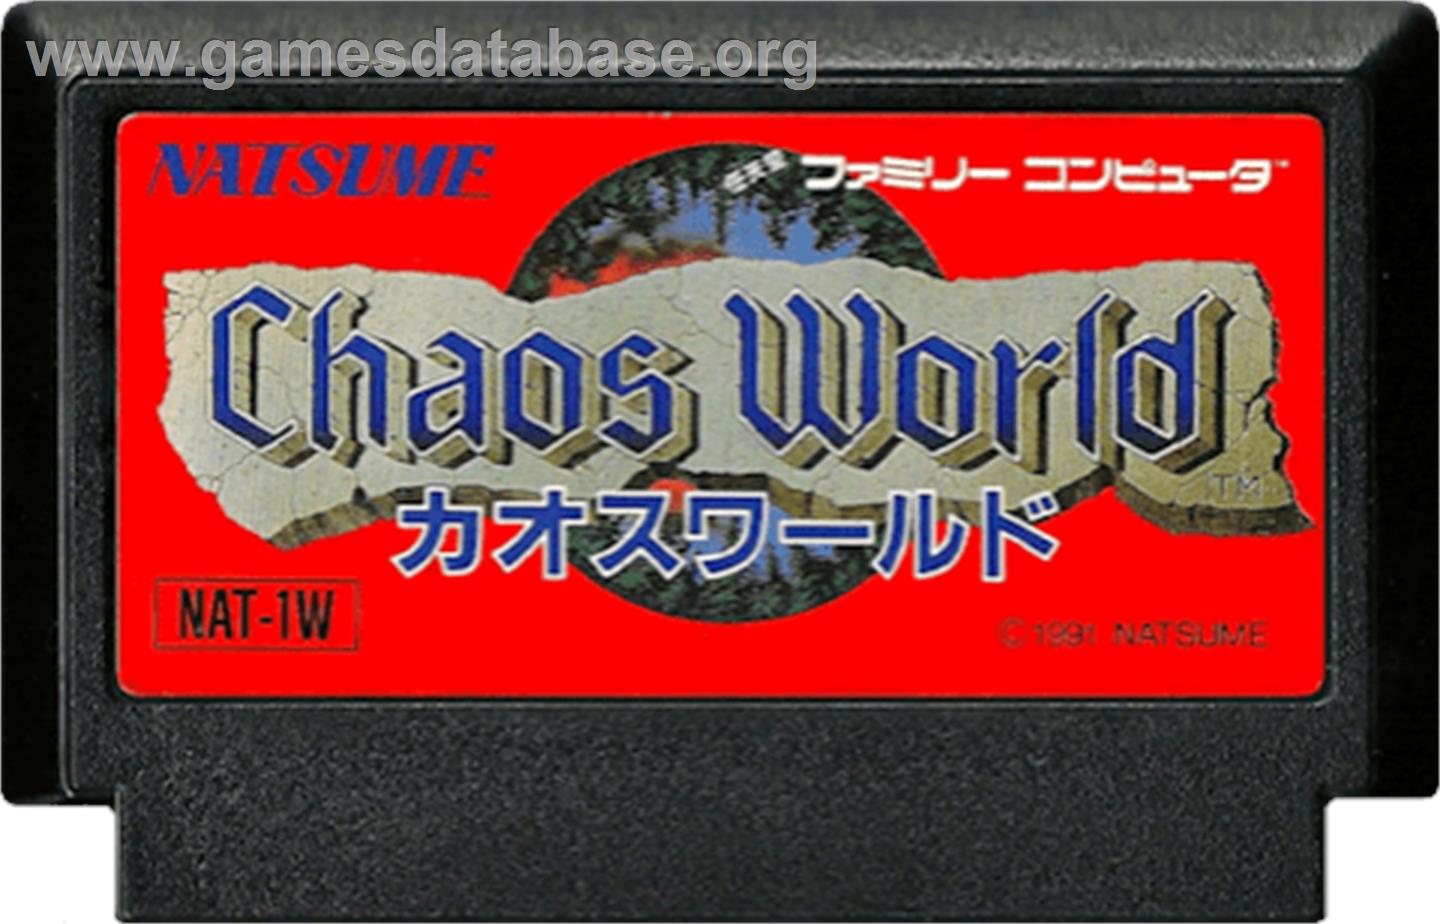 Chaos World - Nintendo NES - Artwork - Cartridge